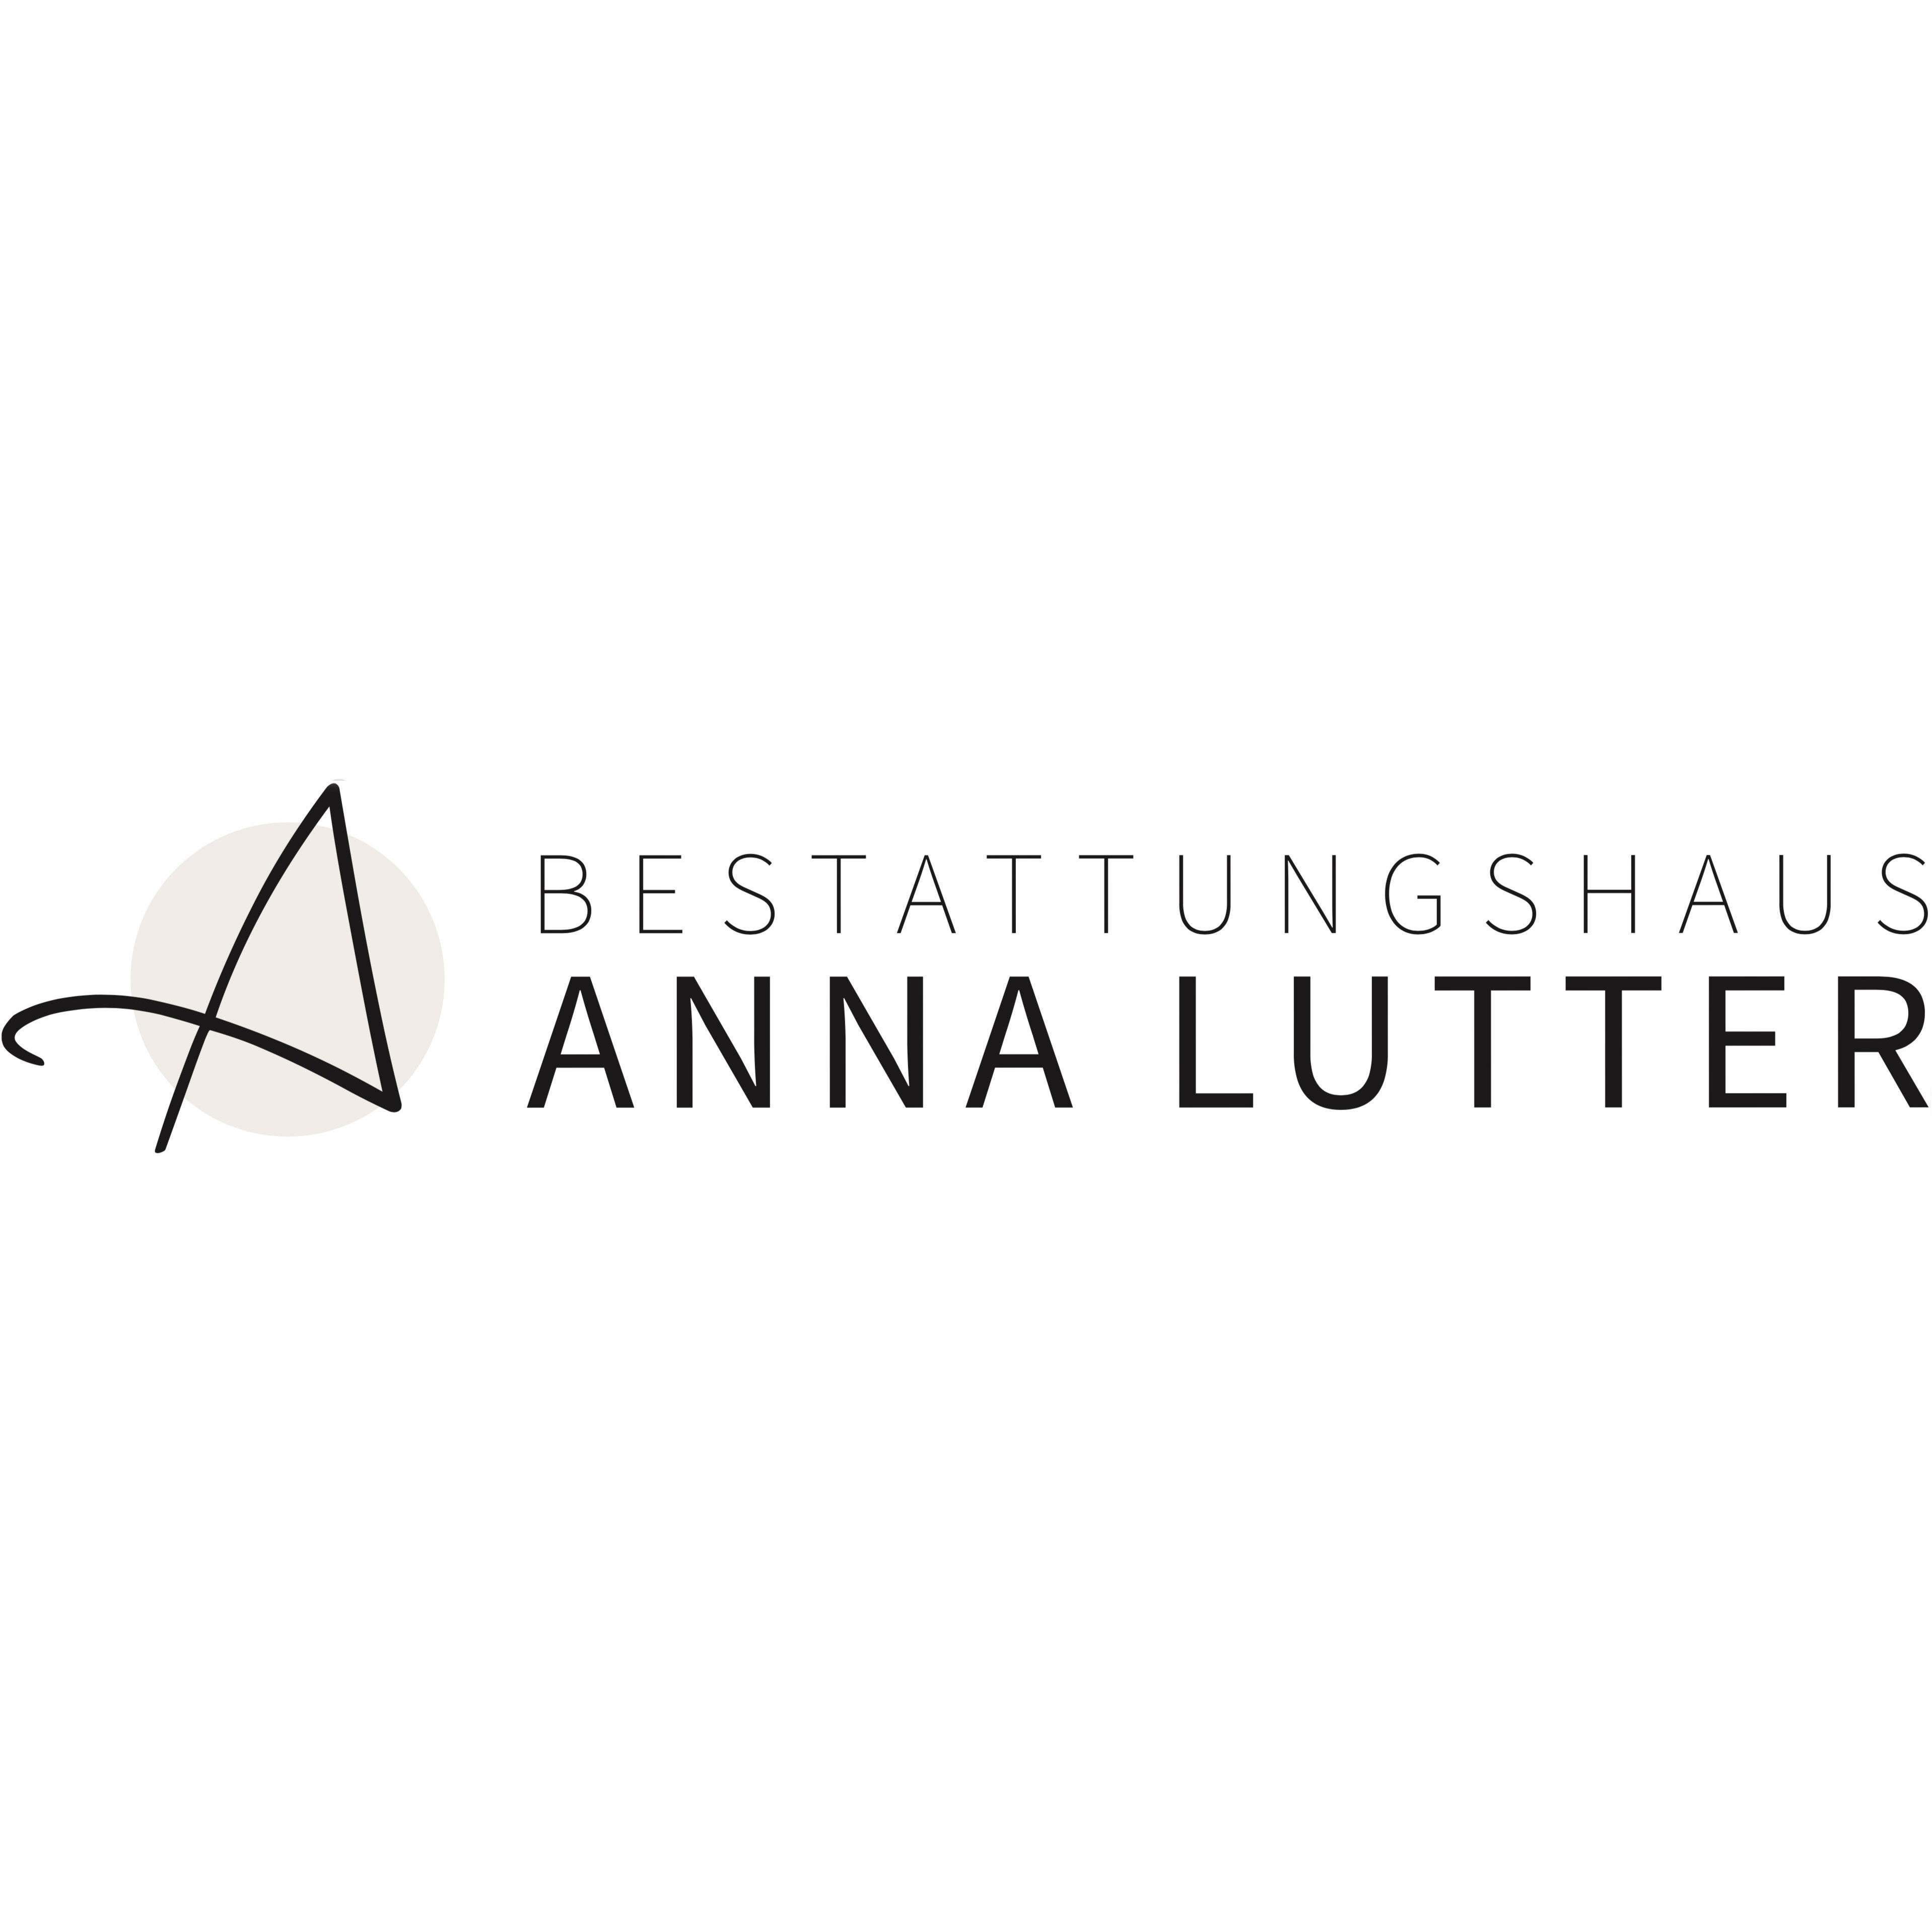 Bestattungshaus Anna Lutter in Neuss